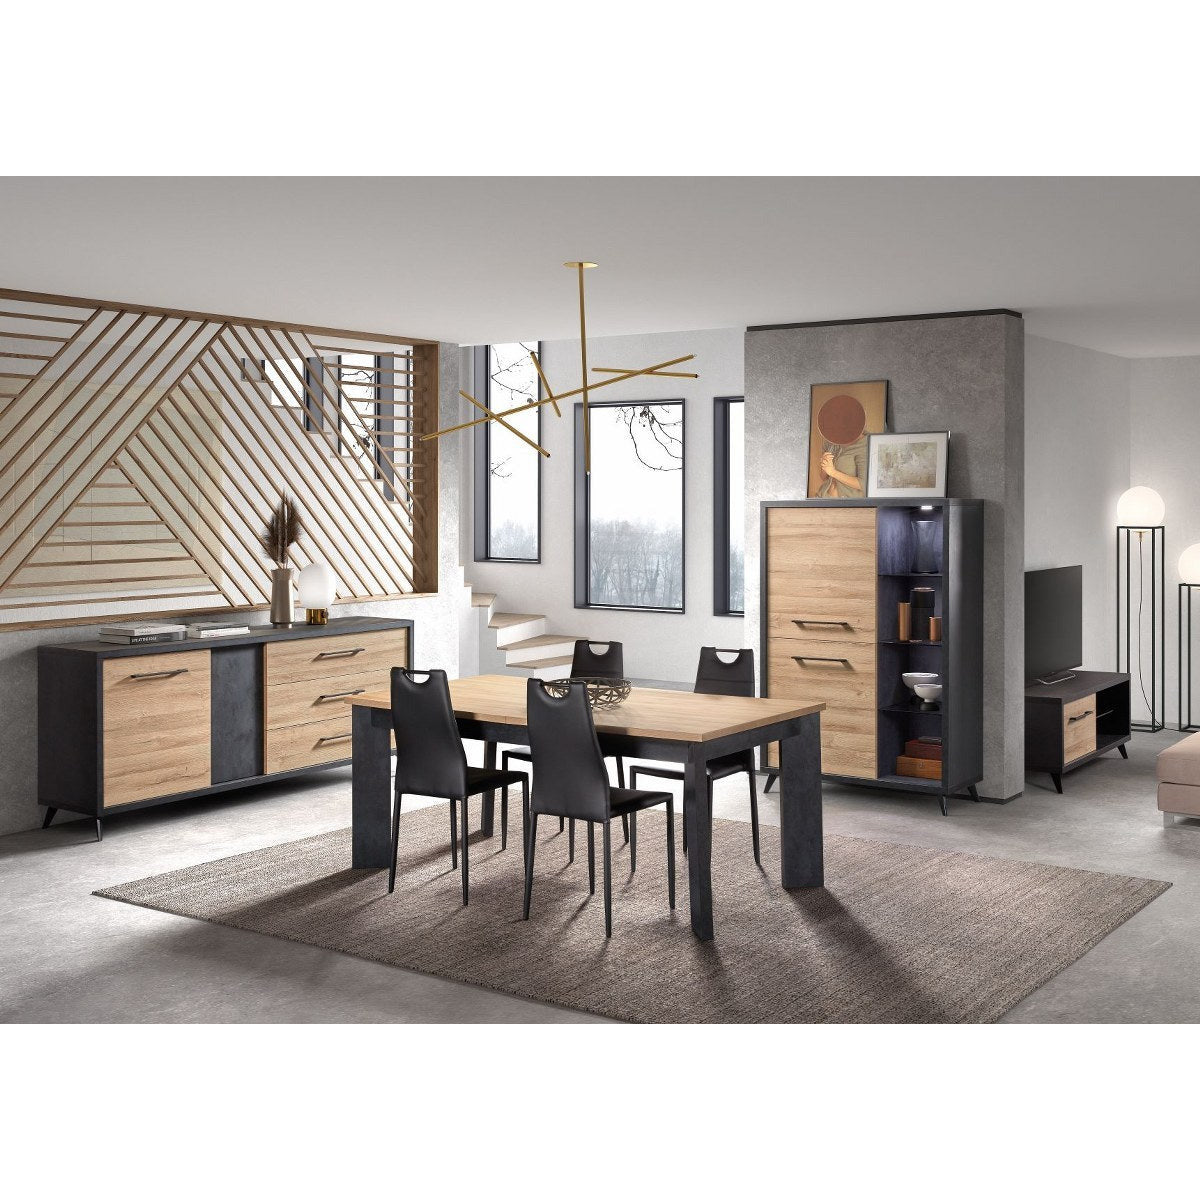 TV cabinet | Furniture series Moulin | Natural, black | 128x54x